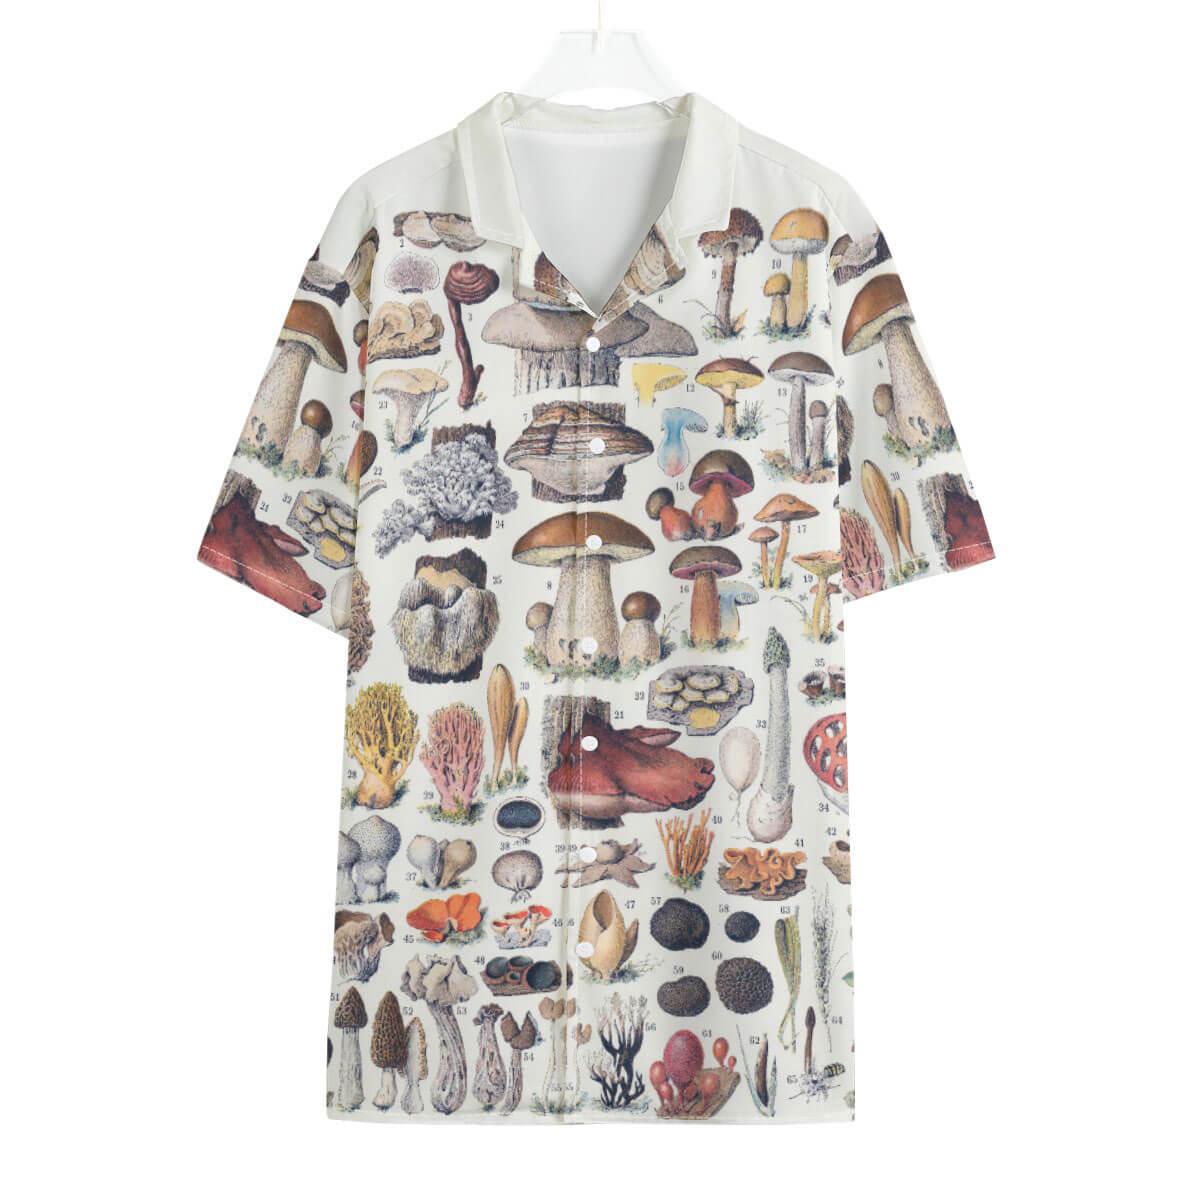 Mushroom Types Hawaiian Shirt featuring diverse fungi species worn by nature enthusiast